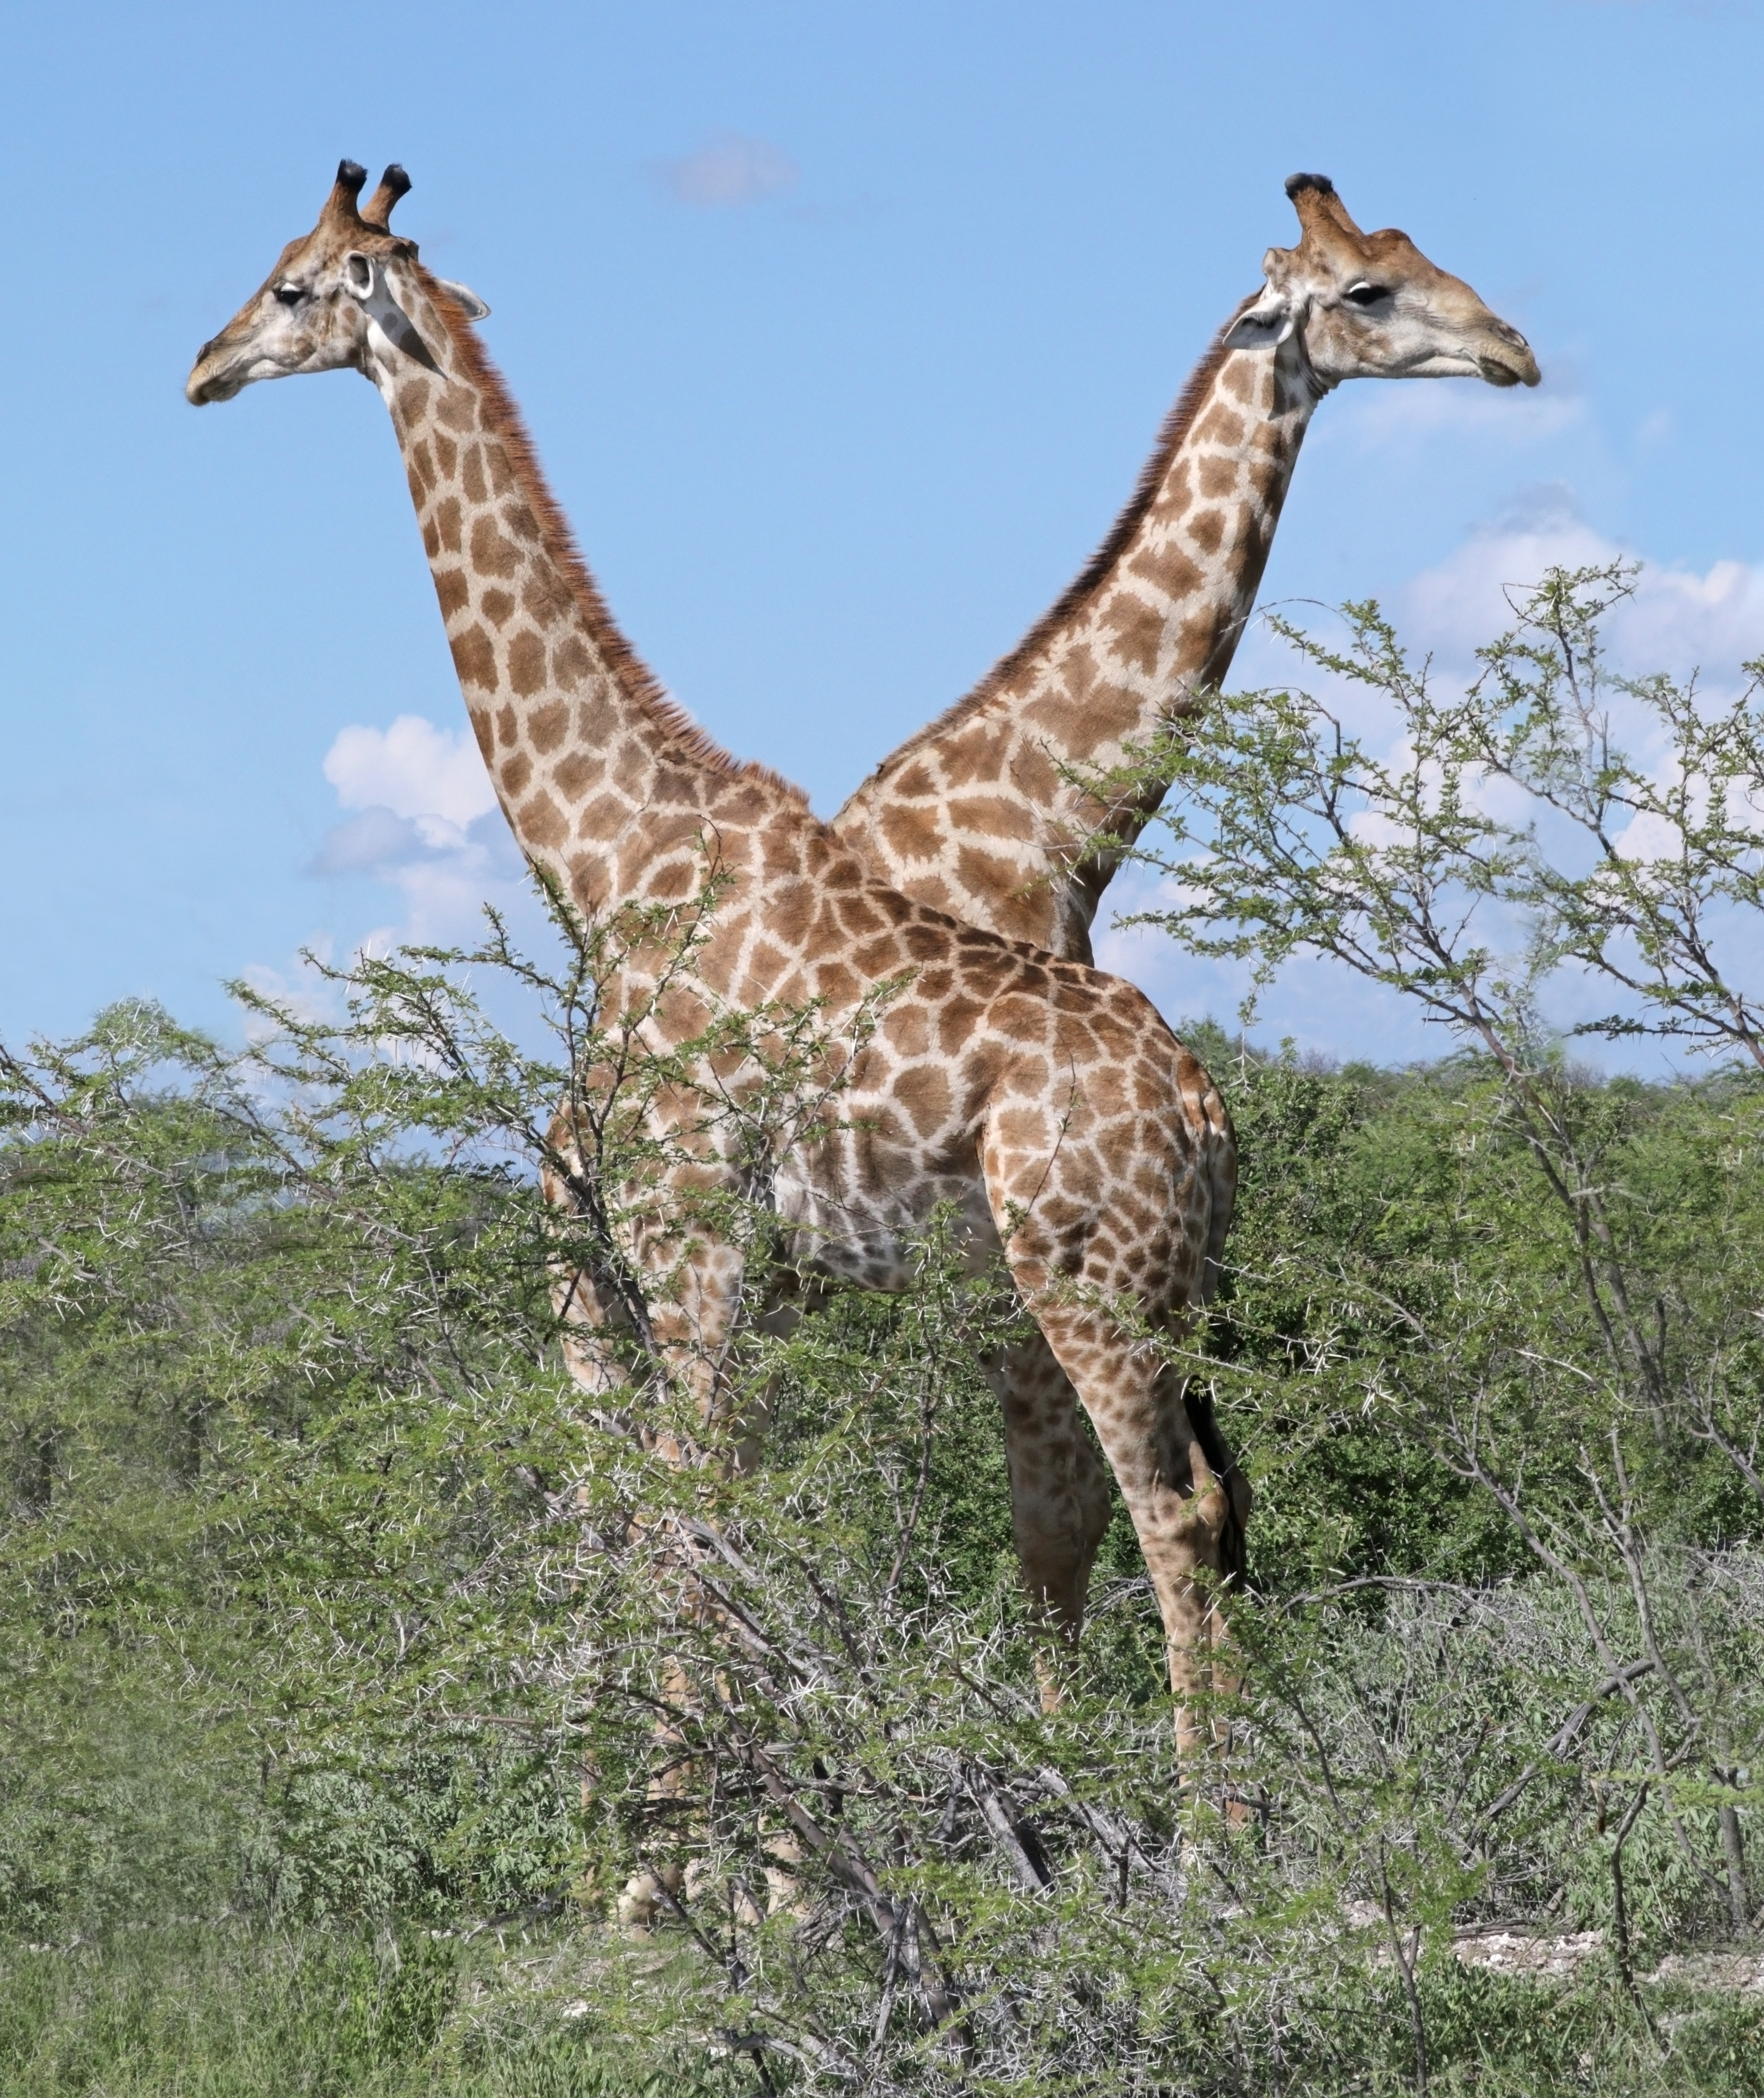 Angolan giraffe (Giraffa camelopardalis angolensis) males